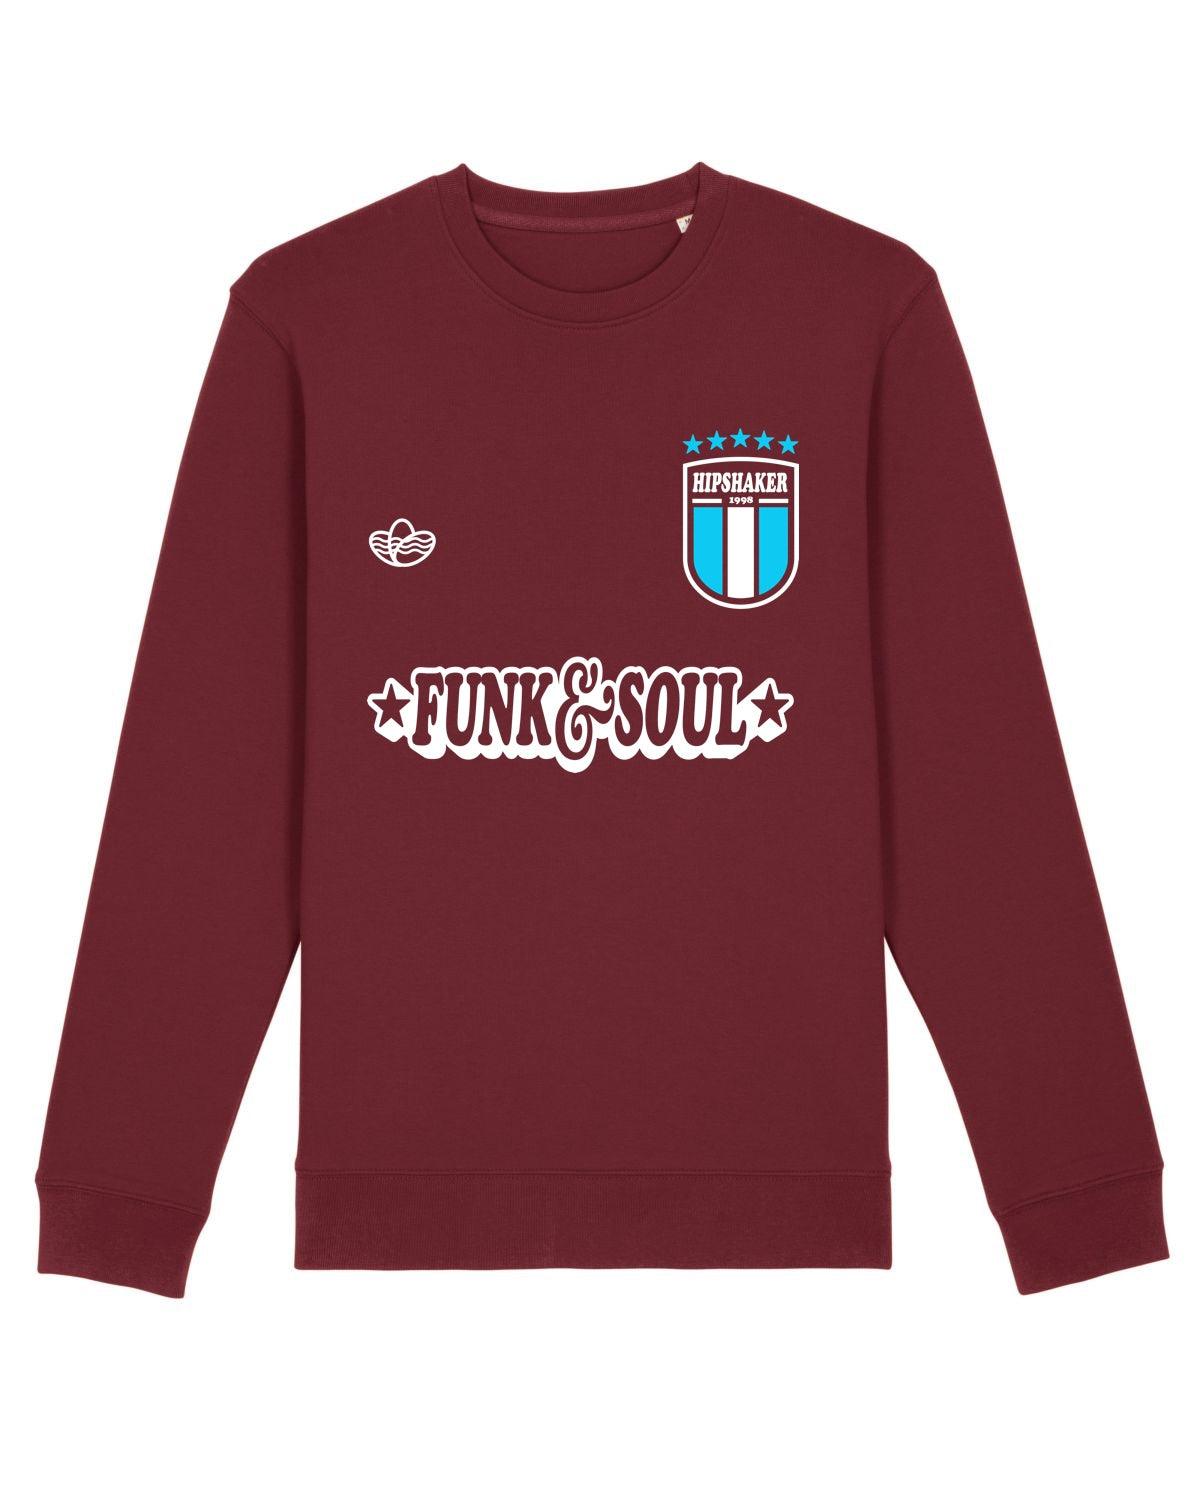 HIPSHAKER FC: Sweatshirt Official Merchandise of Hipshaker (4 Colour Options) - SOUND IS COLOUR